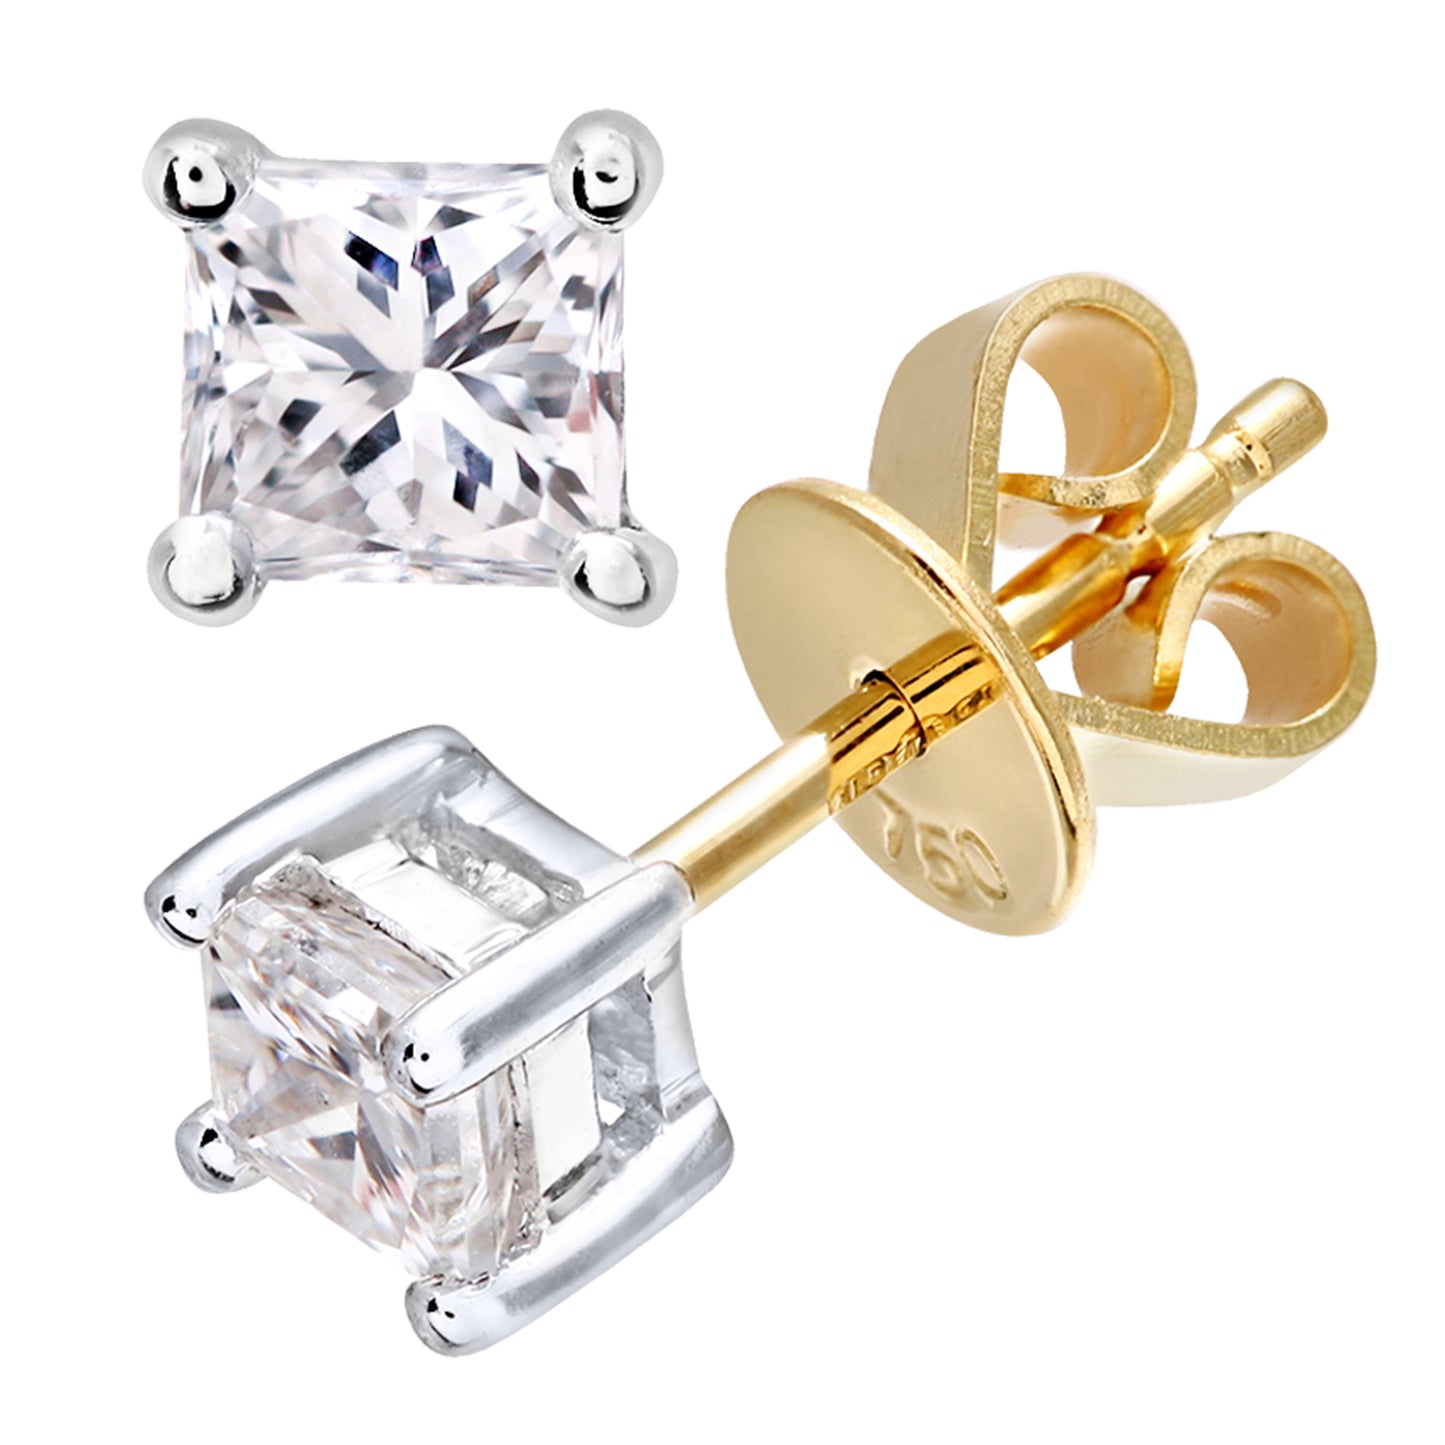 18ct Gold  Princess 1/2ct Diamond Solitaire Stud Earrings - PE0AXL4421Y18JPK